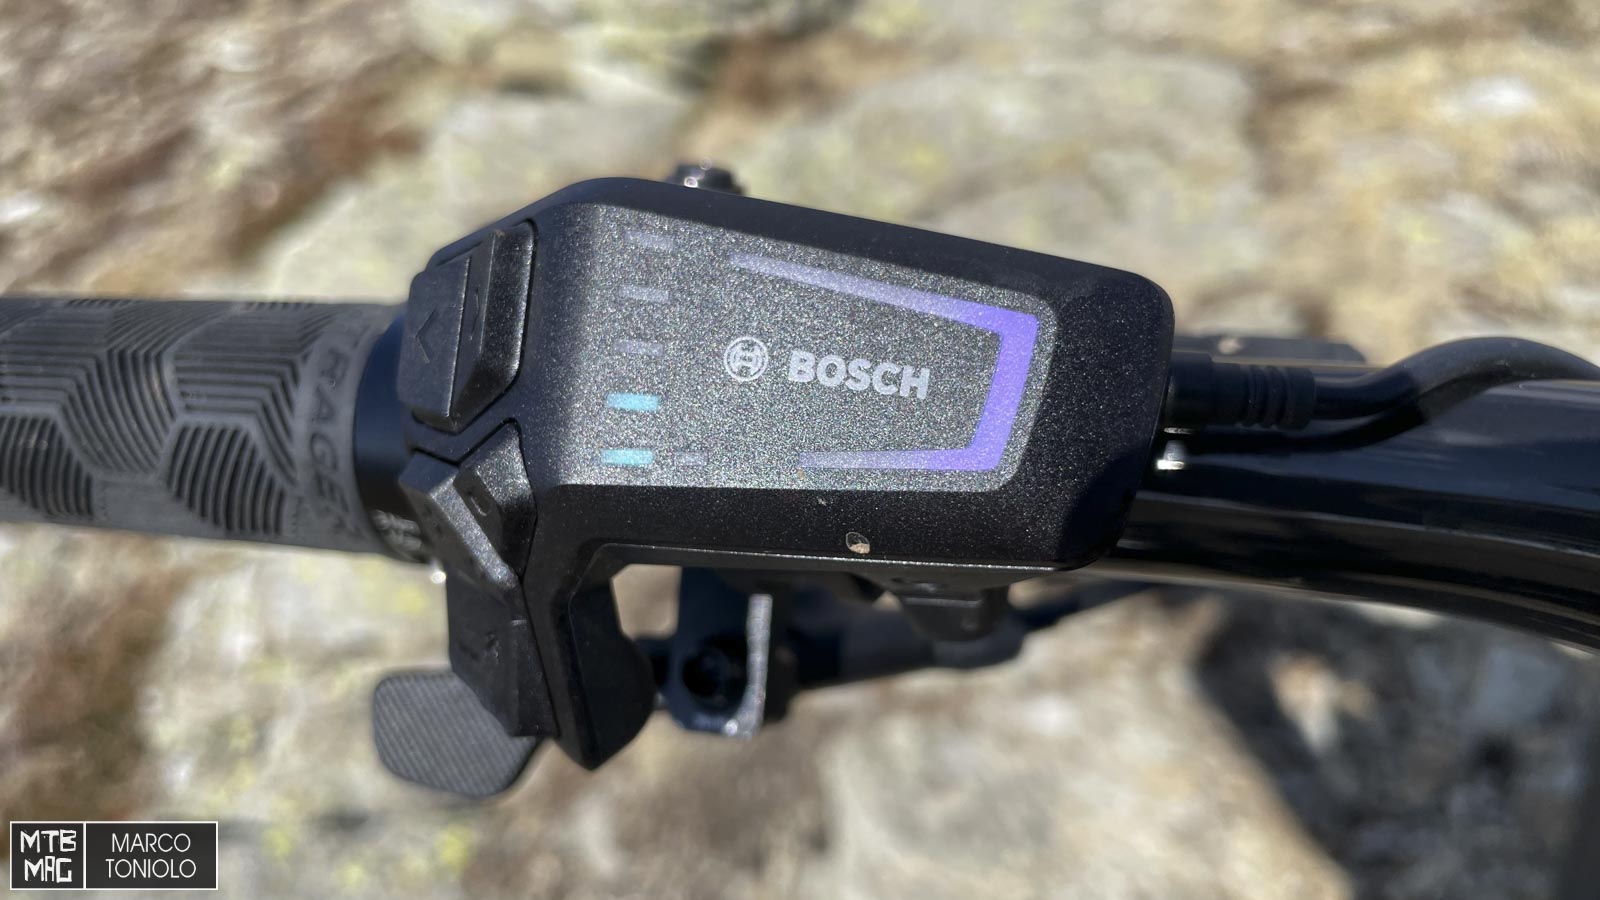 Bosch sistema intelligente